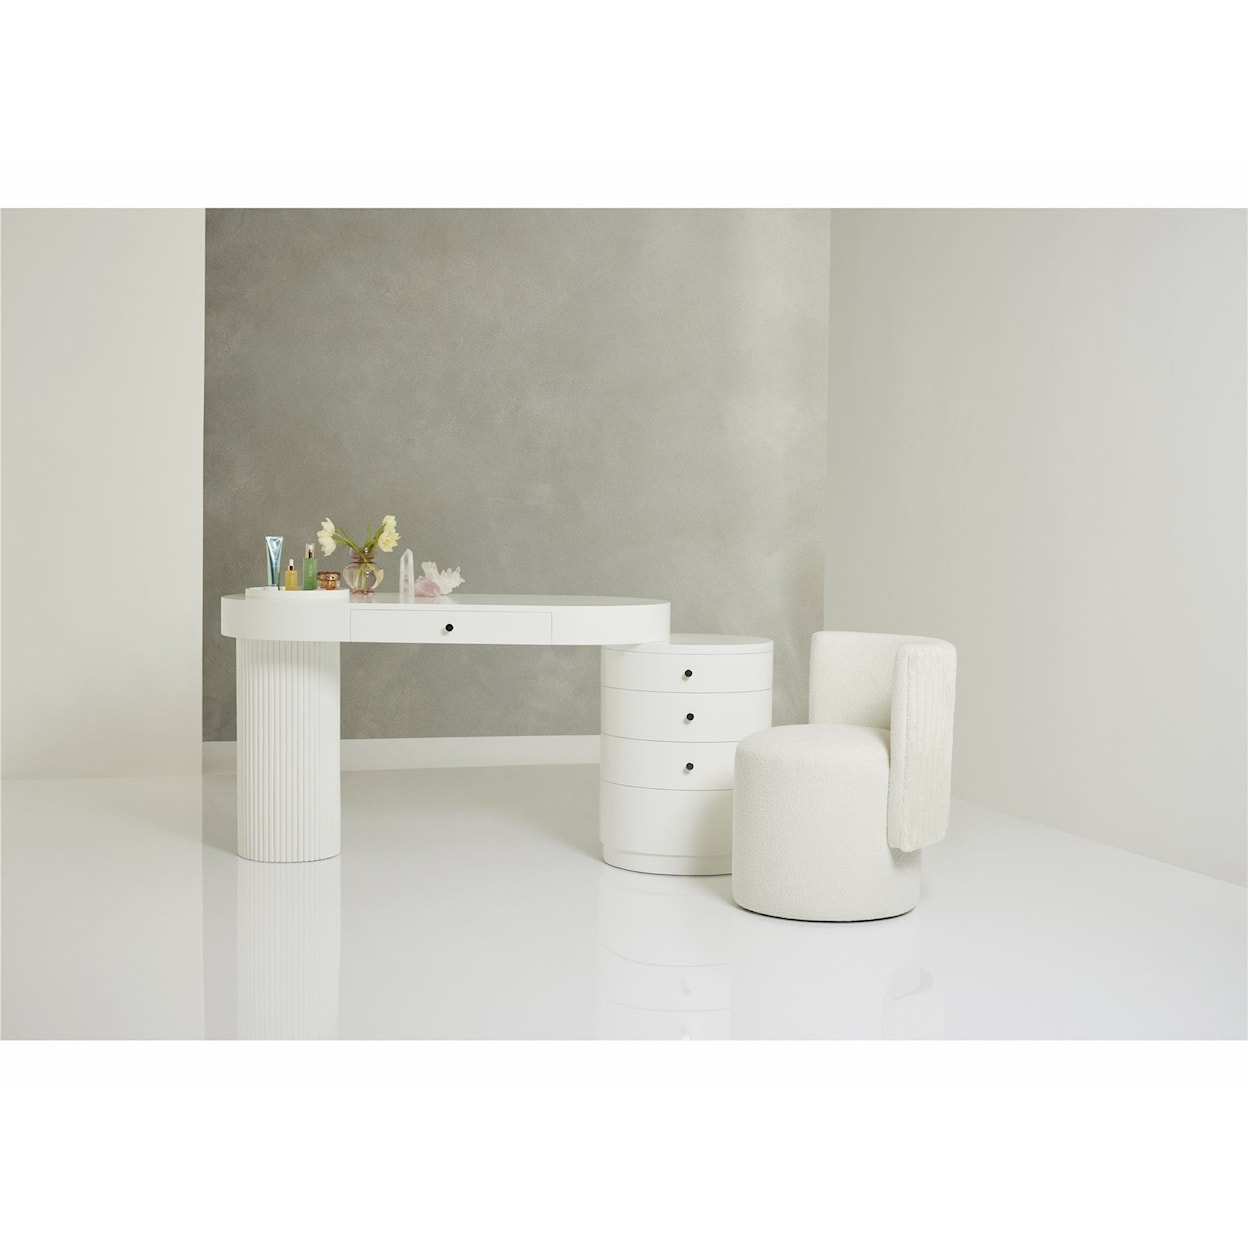 Universal Tranquility - Miranda Kerr Home Mode Desk Vanity